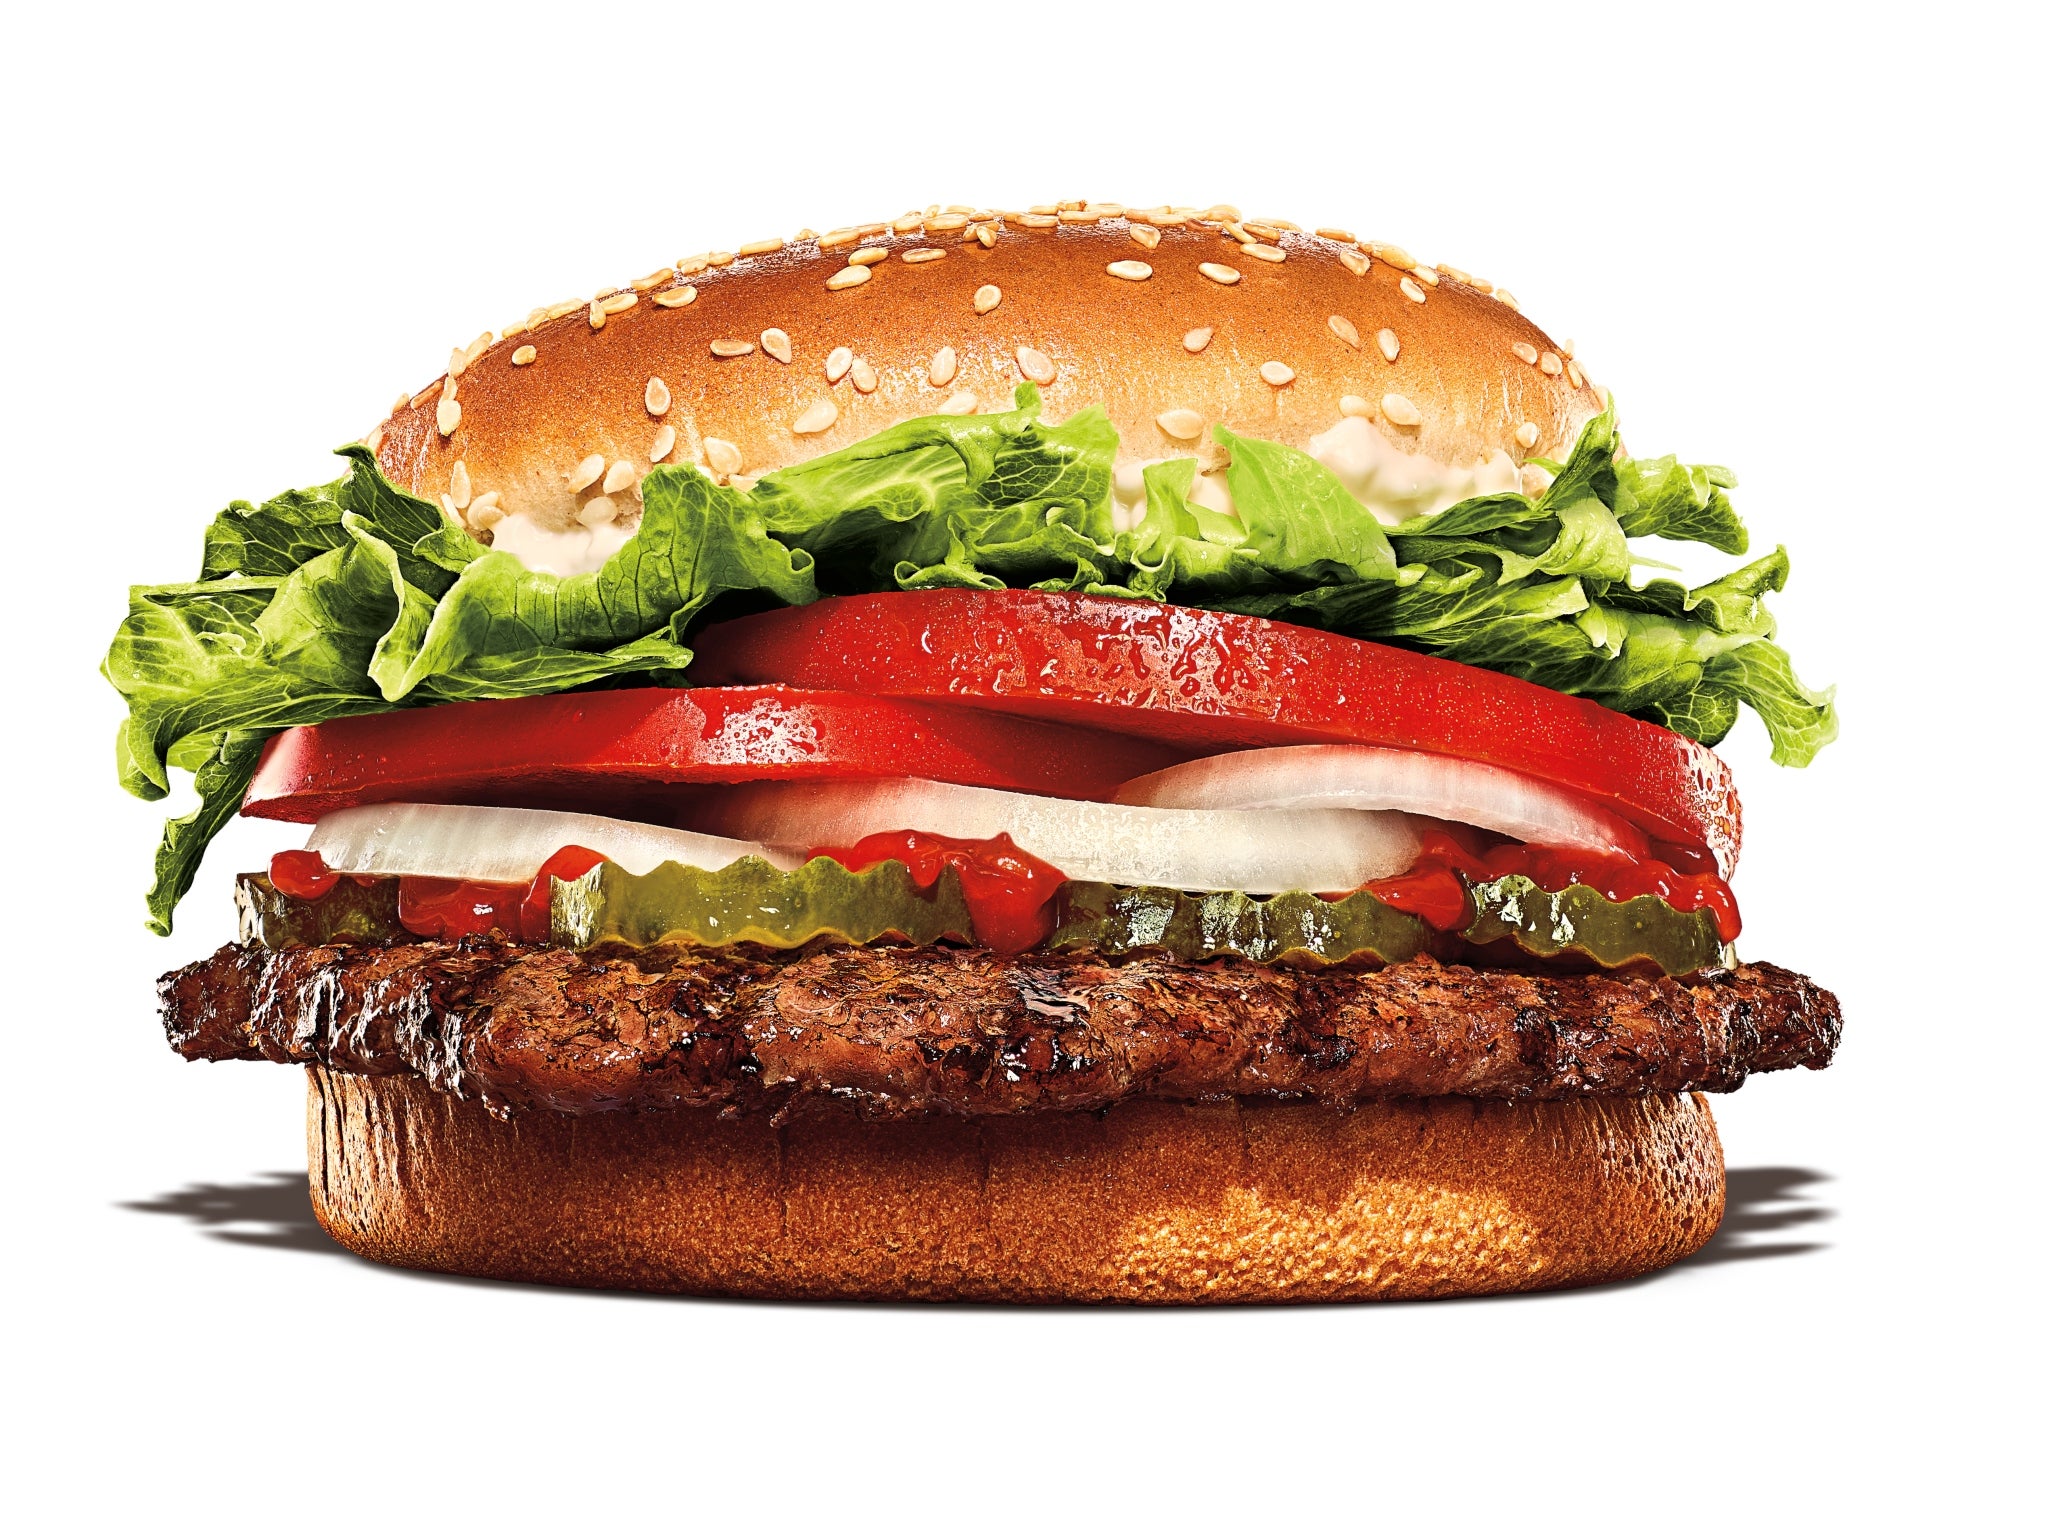 burger king commercial swingers Sex Images Hq